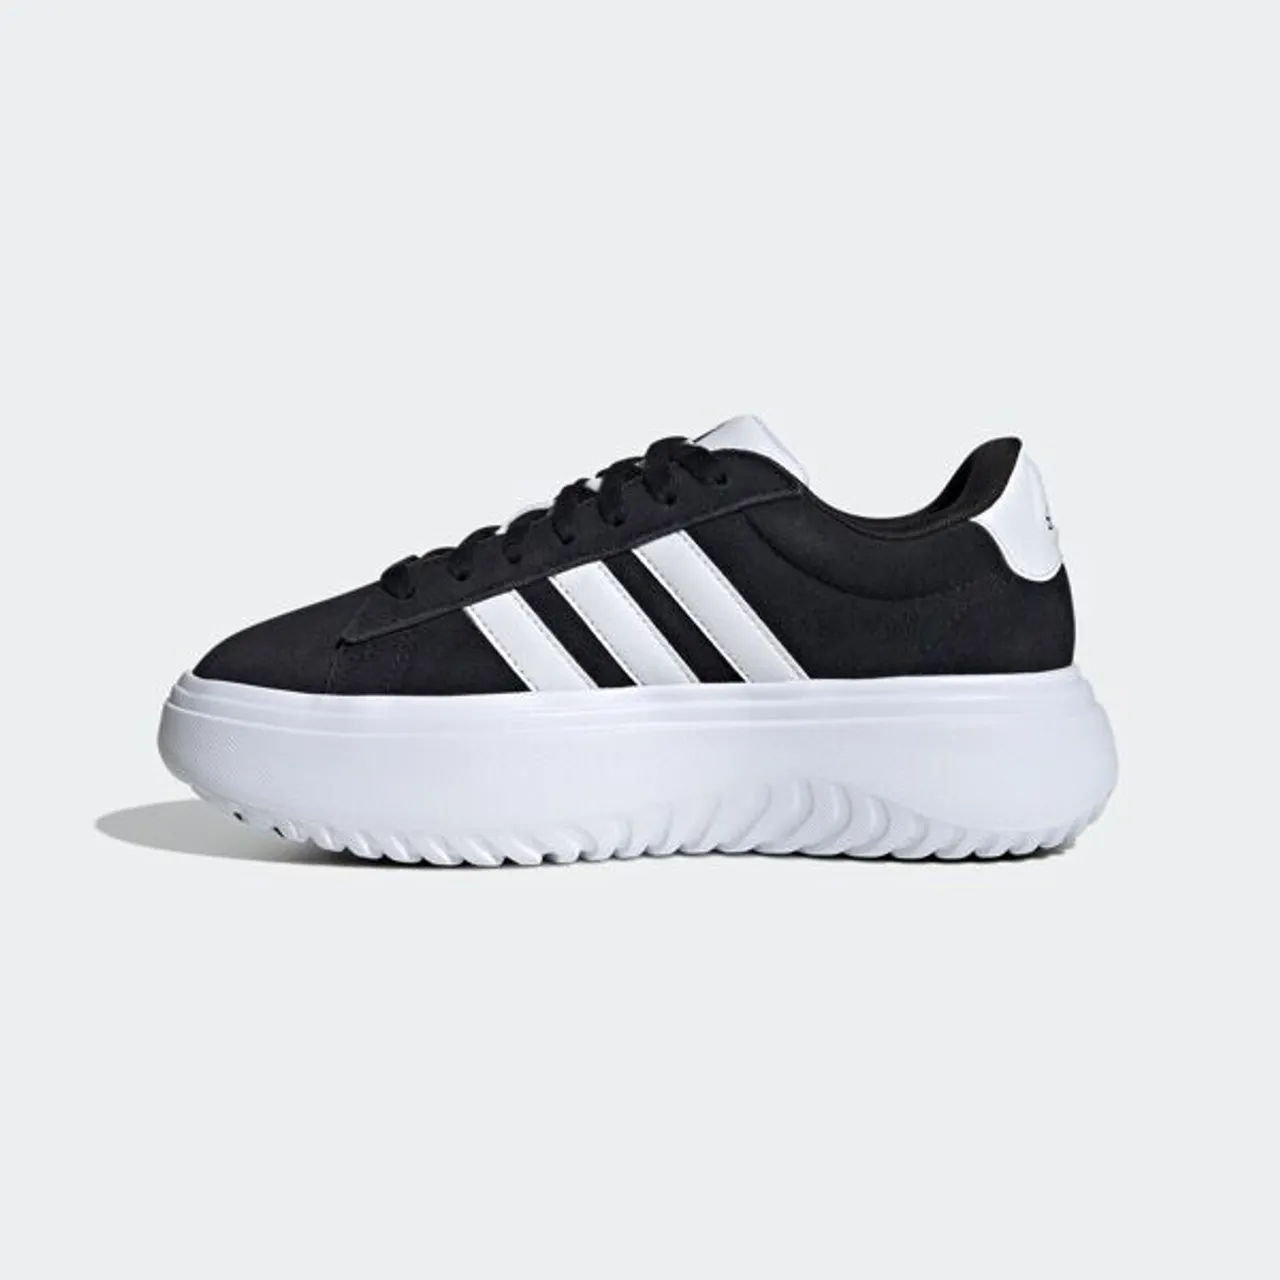 Sneaker ADIDAS SPORTSWEAR "GRAND COURT PLATFORM" Gr. 40,5, schwarz-weiß (core black, cloud white, core black) Schuhe Sneaker